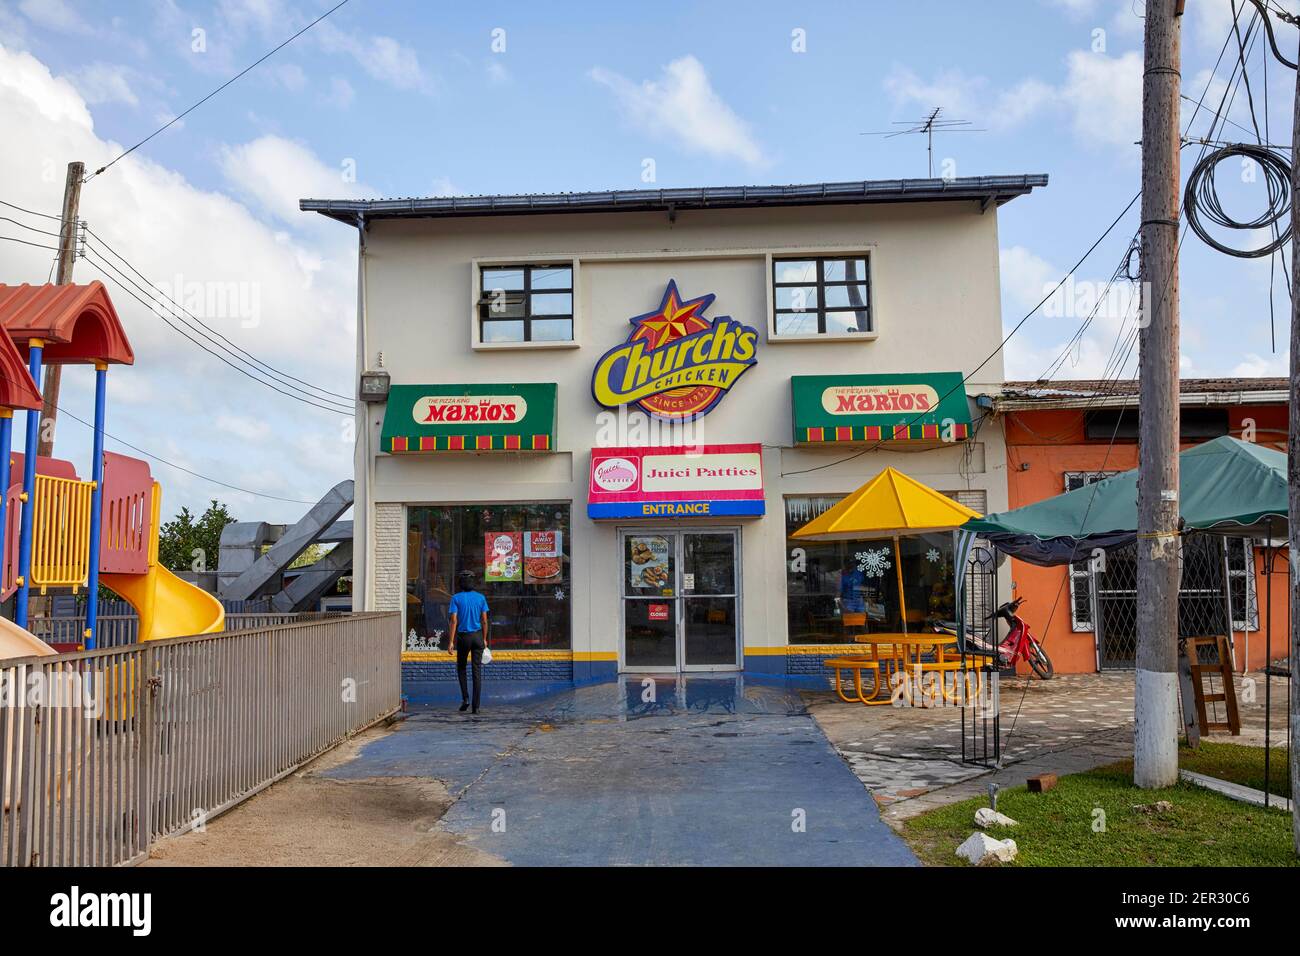 Church's Chicken, The Pizza King Mario's und Juici Patties Fast-Food-Restaurants in Linden Guyana Südamerika Stockfoto